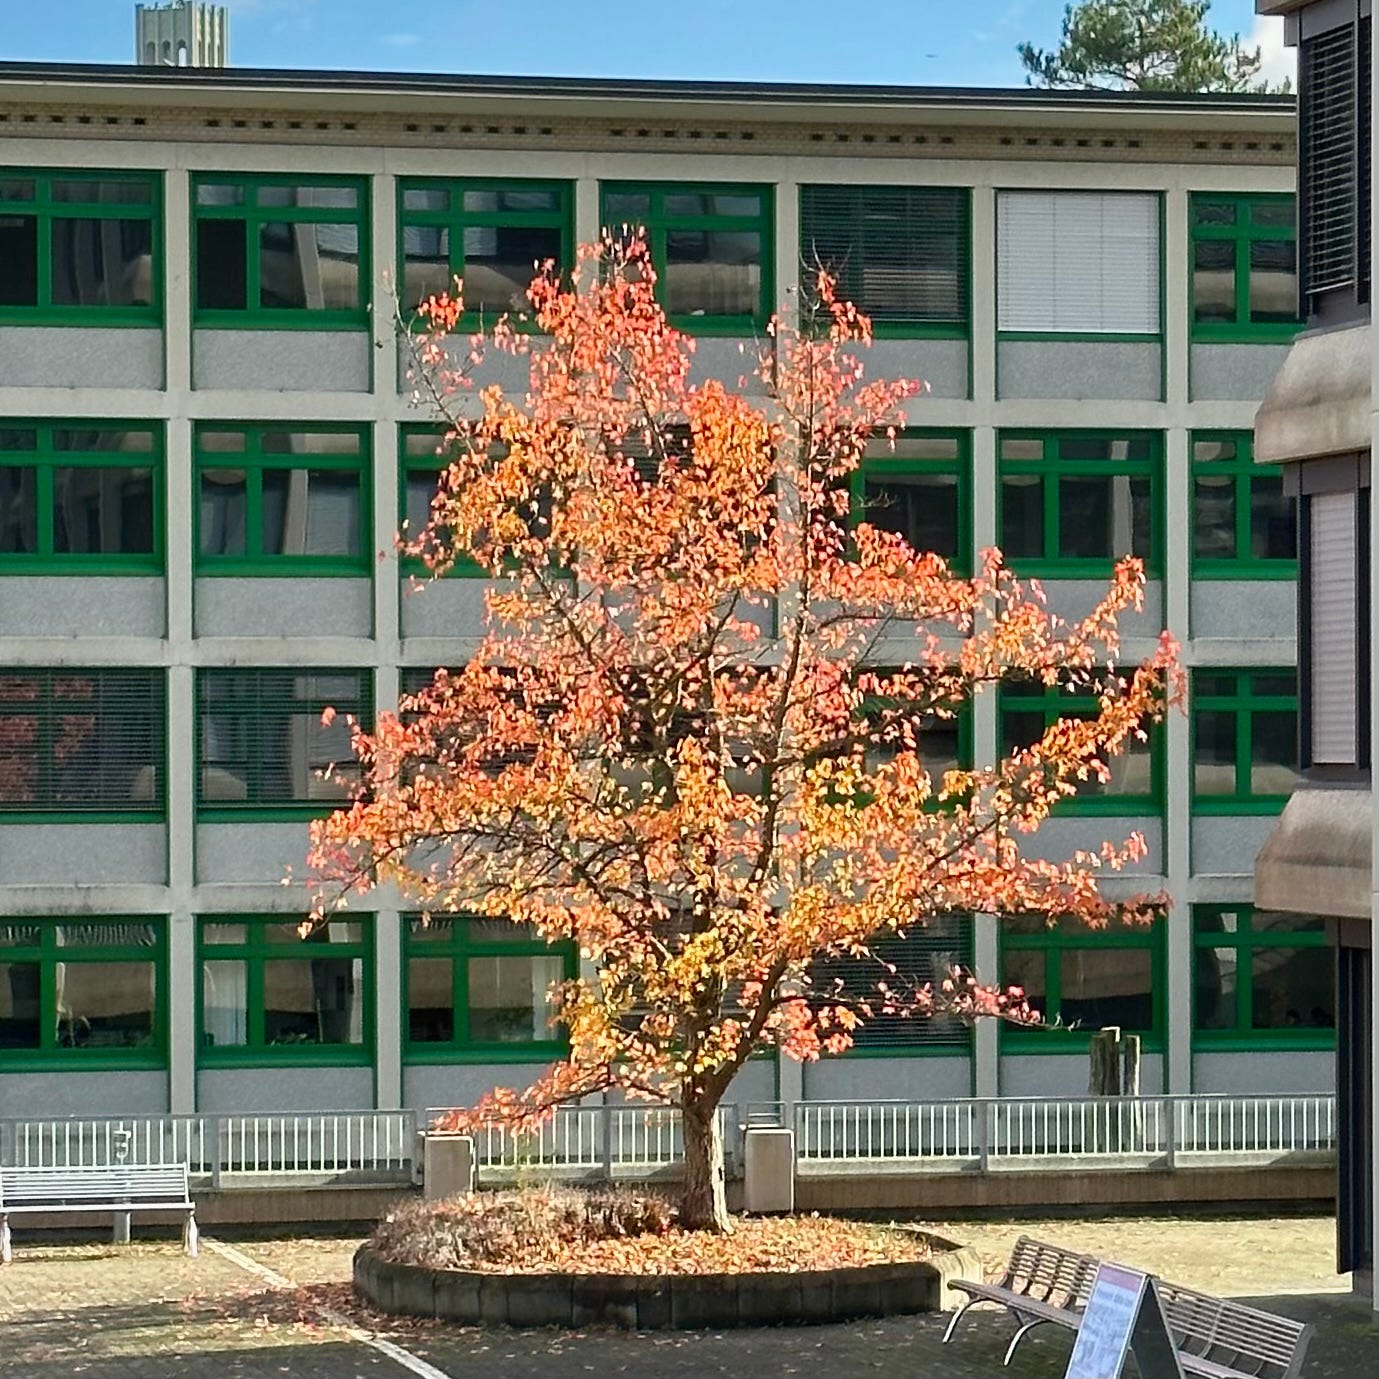 Tree with orange leaves during fall season